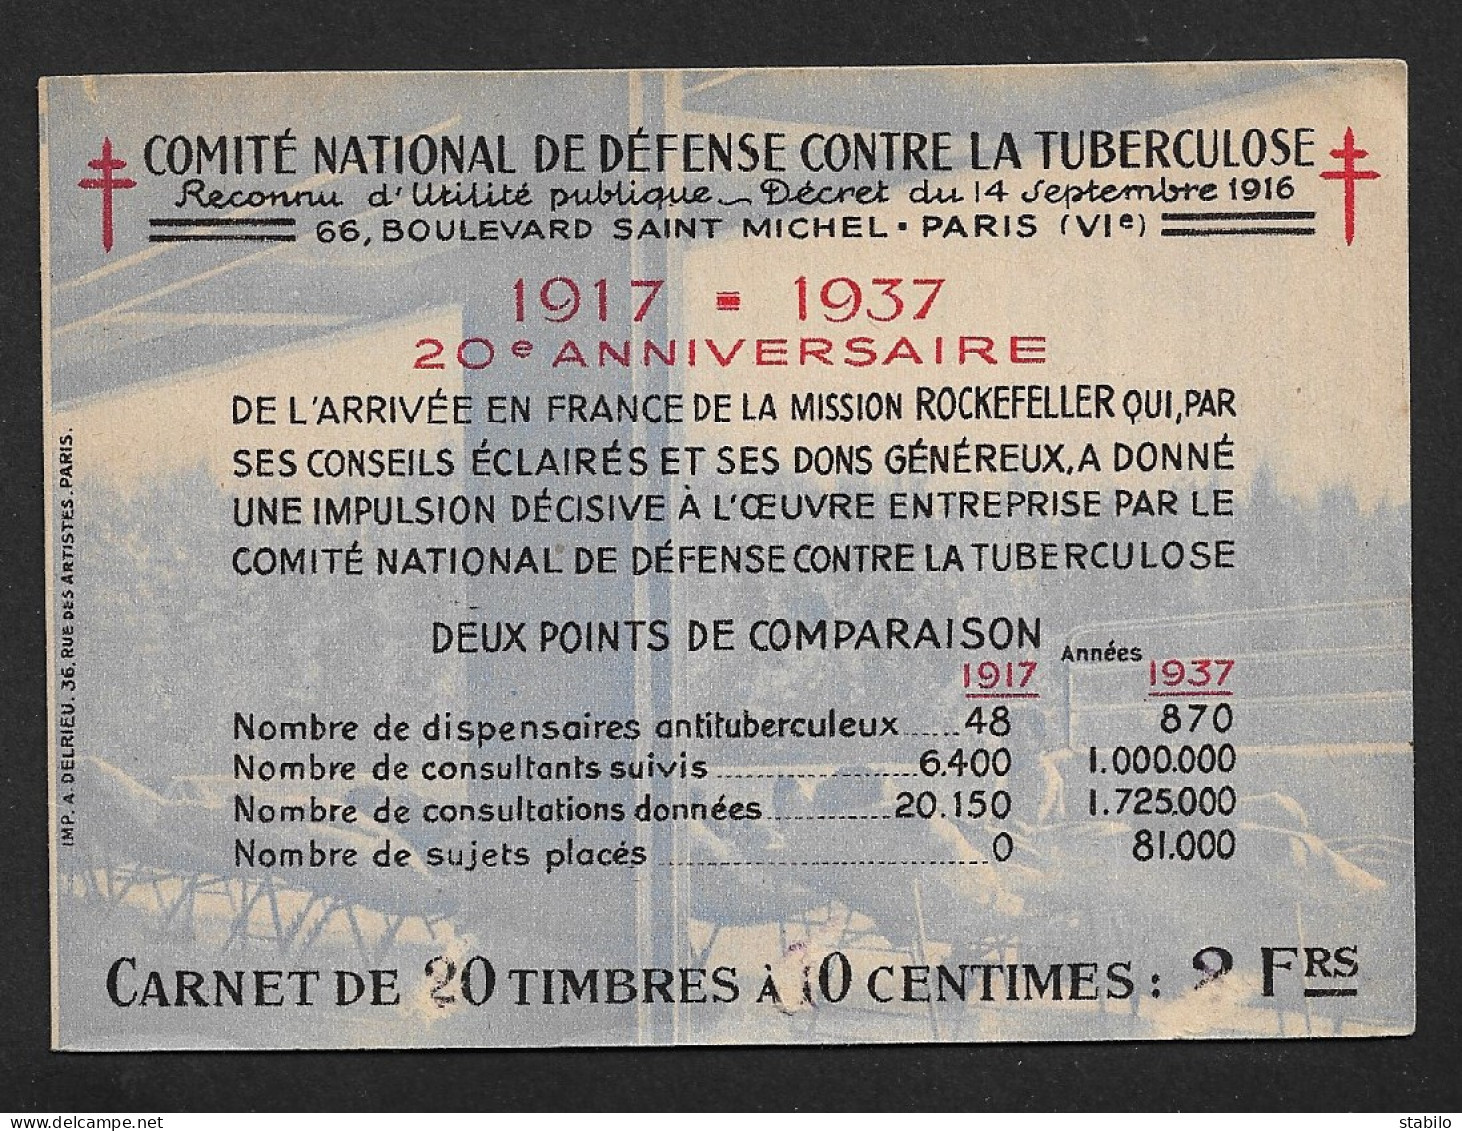 CARNET DE VIGNETTES - COMITE DE DEFENSE CONTRE LA TUBERCULOSE 1937 - FORMAT PLIE 13 X 9 CM - Cinderellas